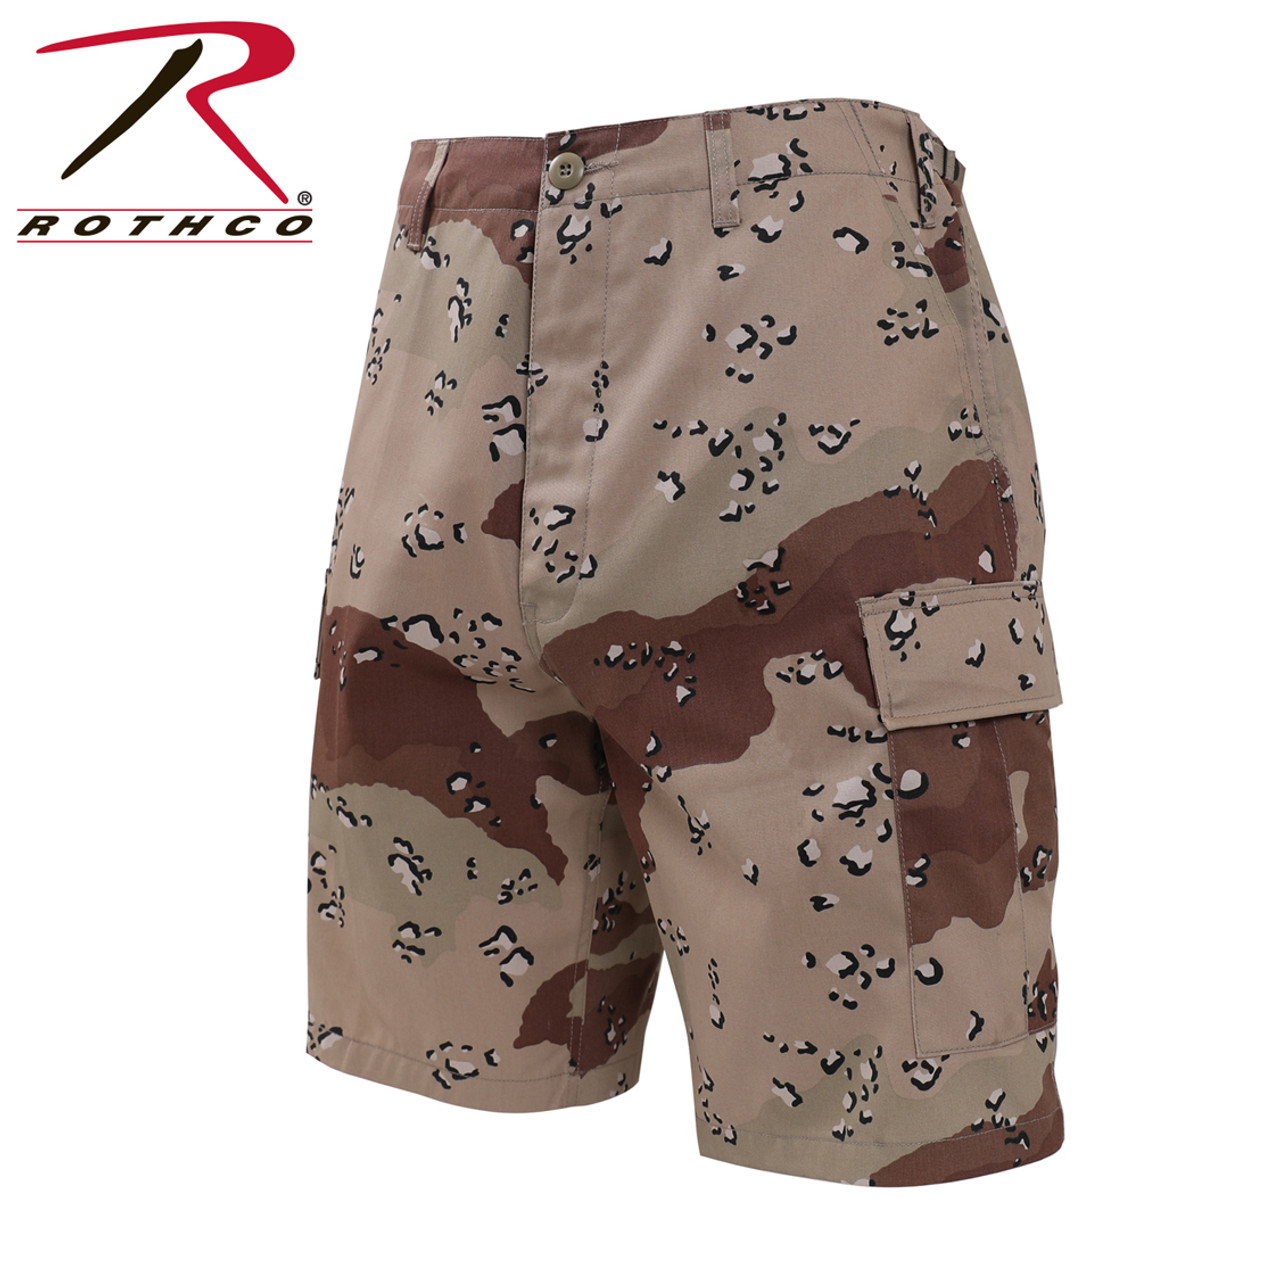 Shop Desert Camo Military Shorts - Fatigues Army Navy Gear